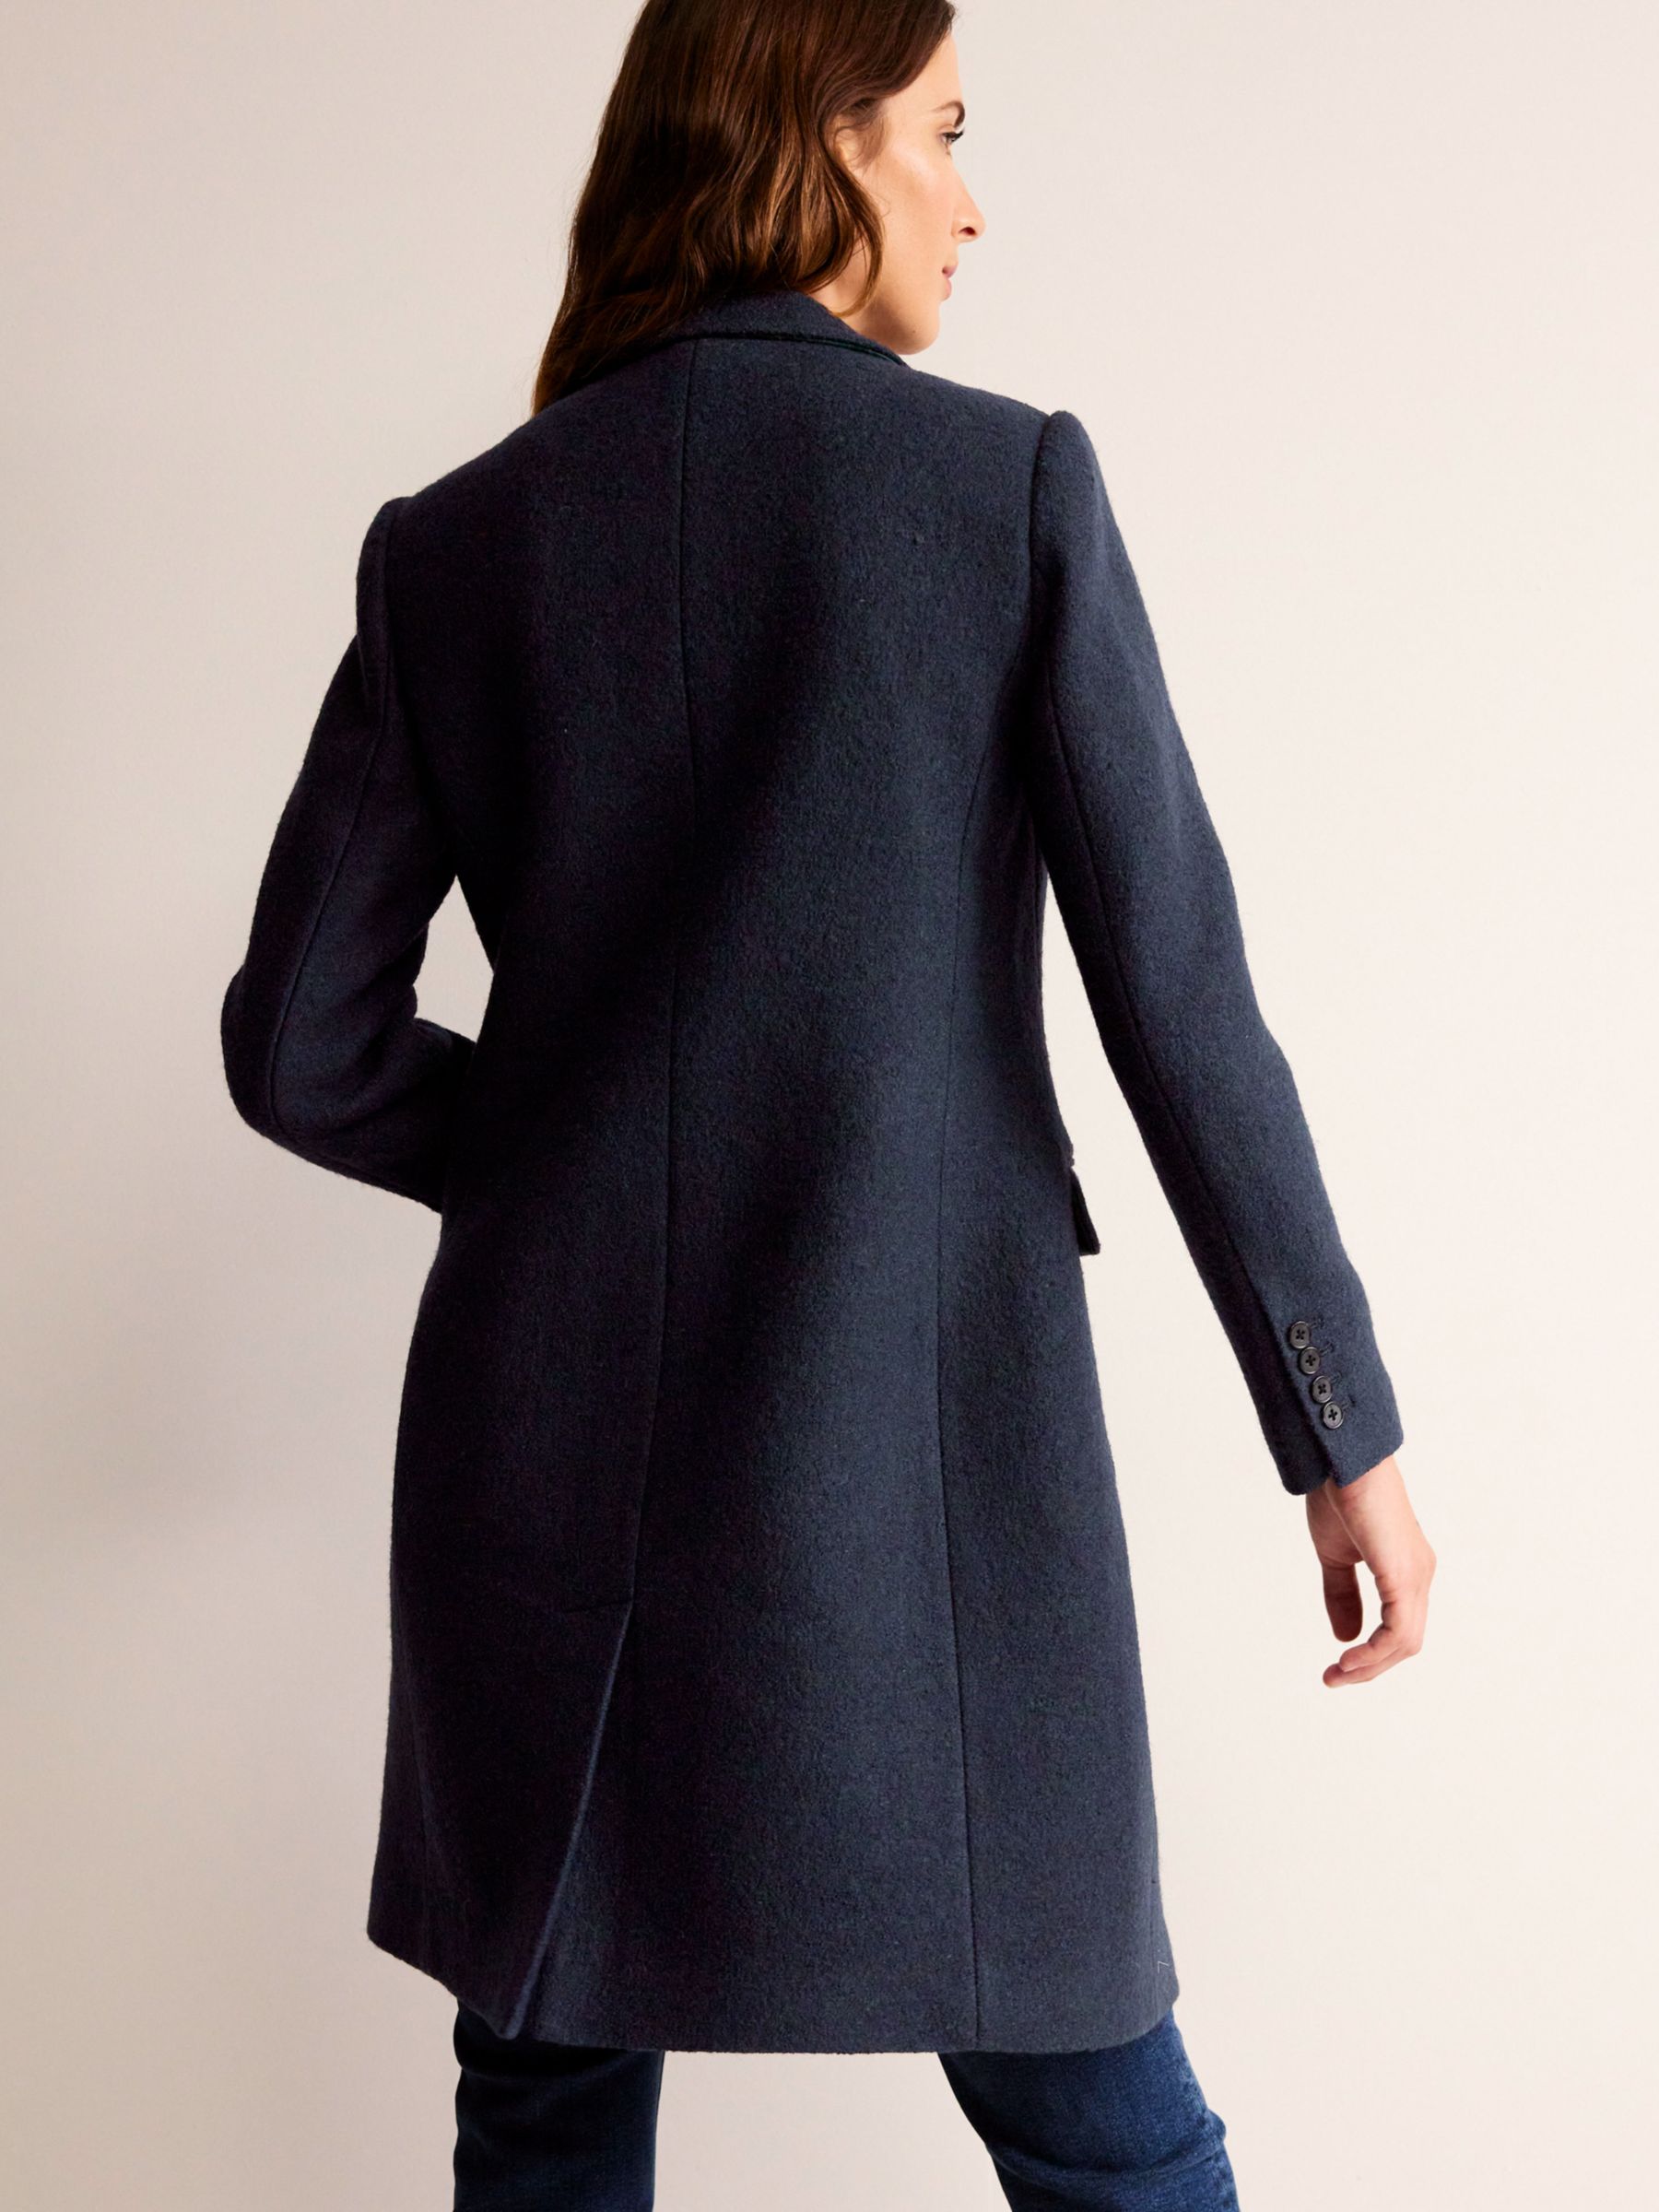 Boden Canterbury Textured Wool Blend Coat, Navy at John Lewis & Partners